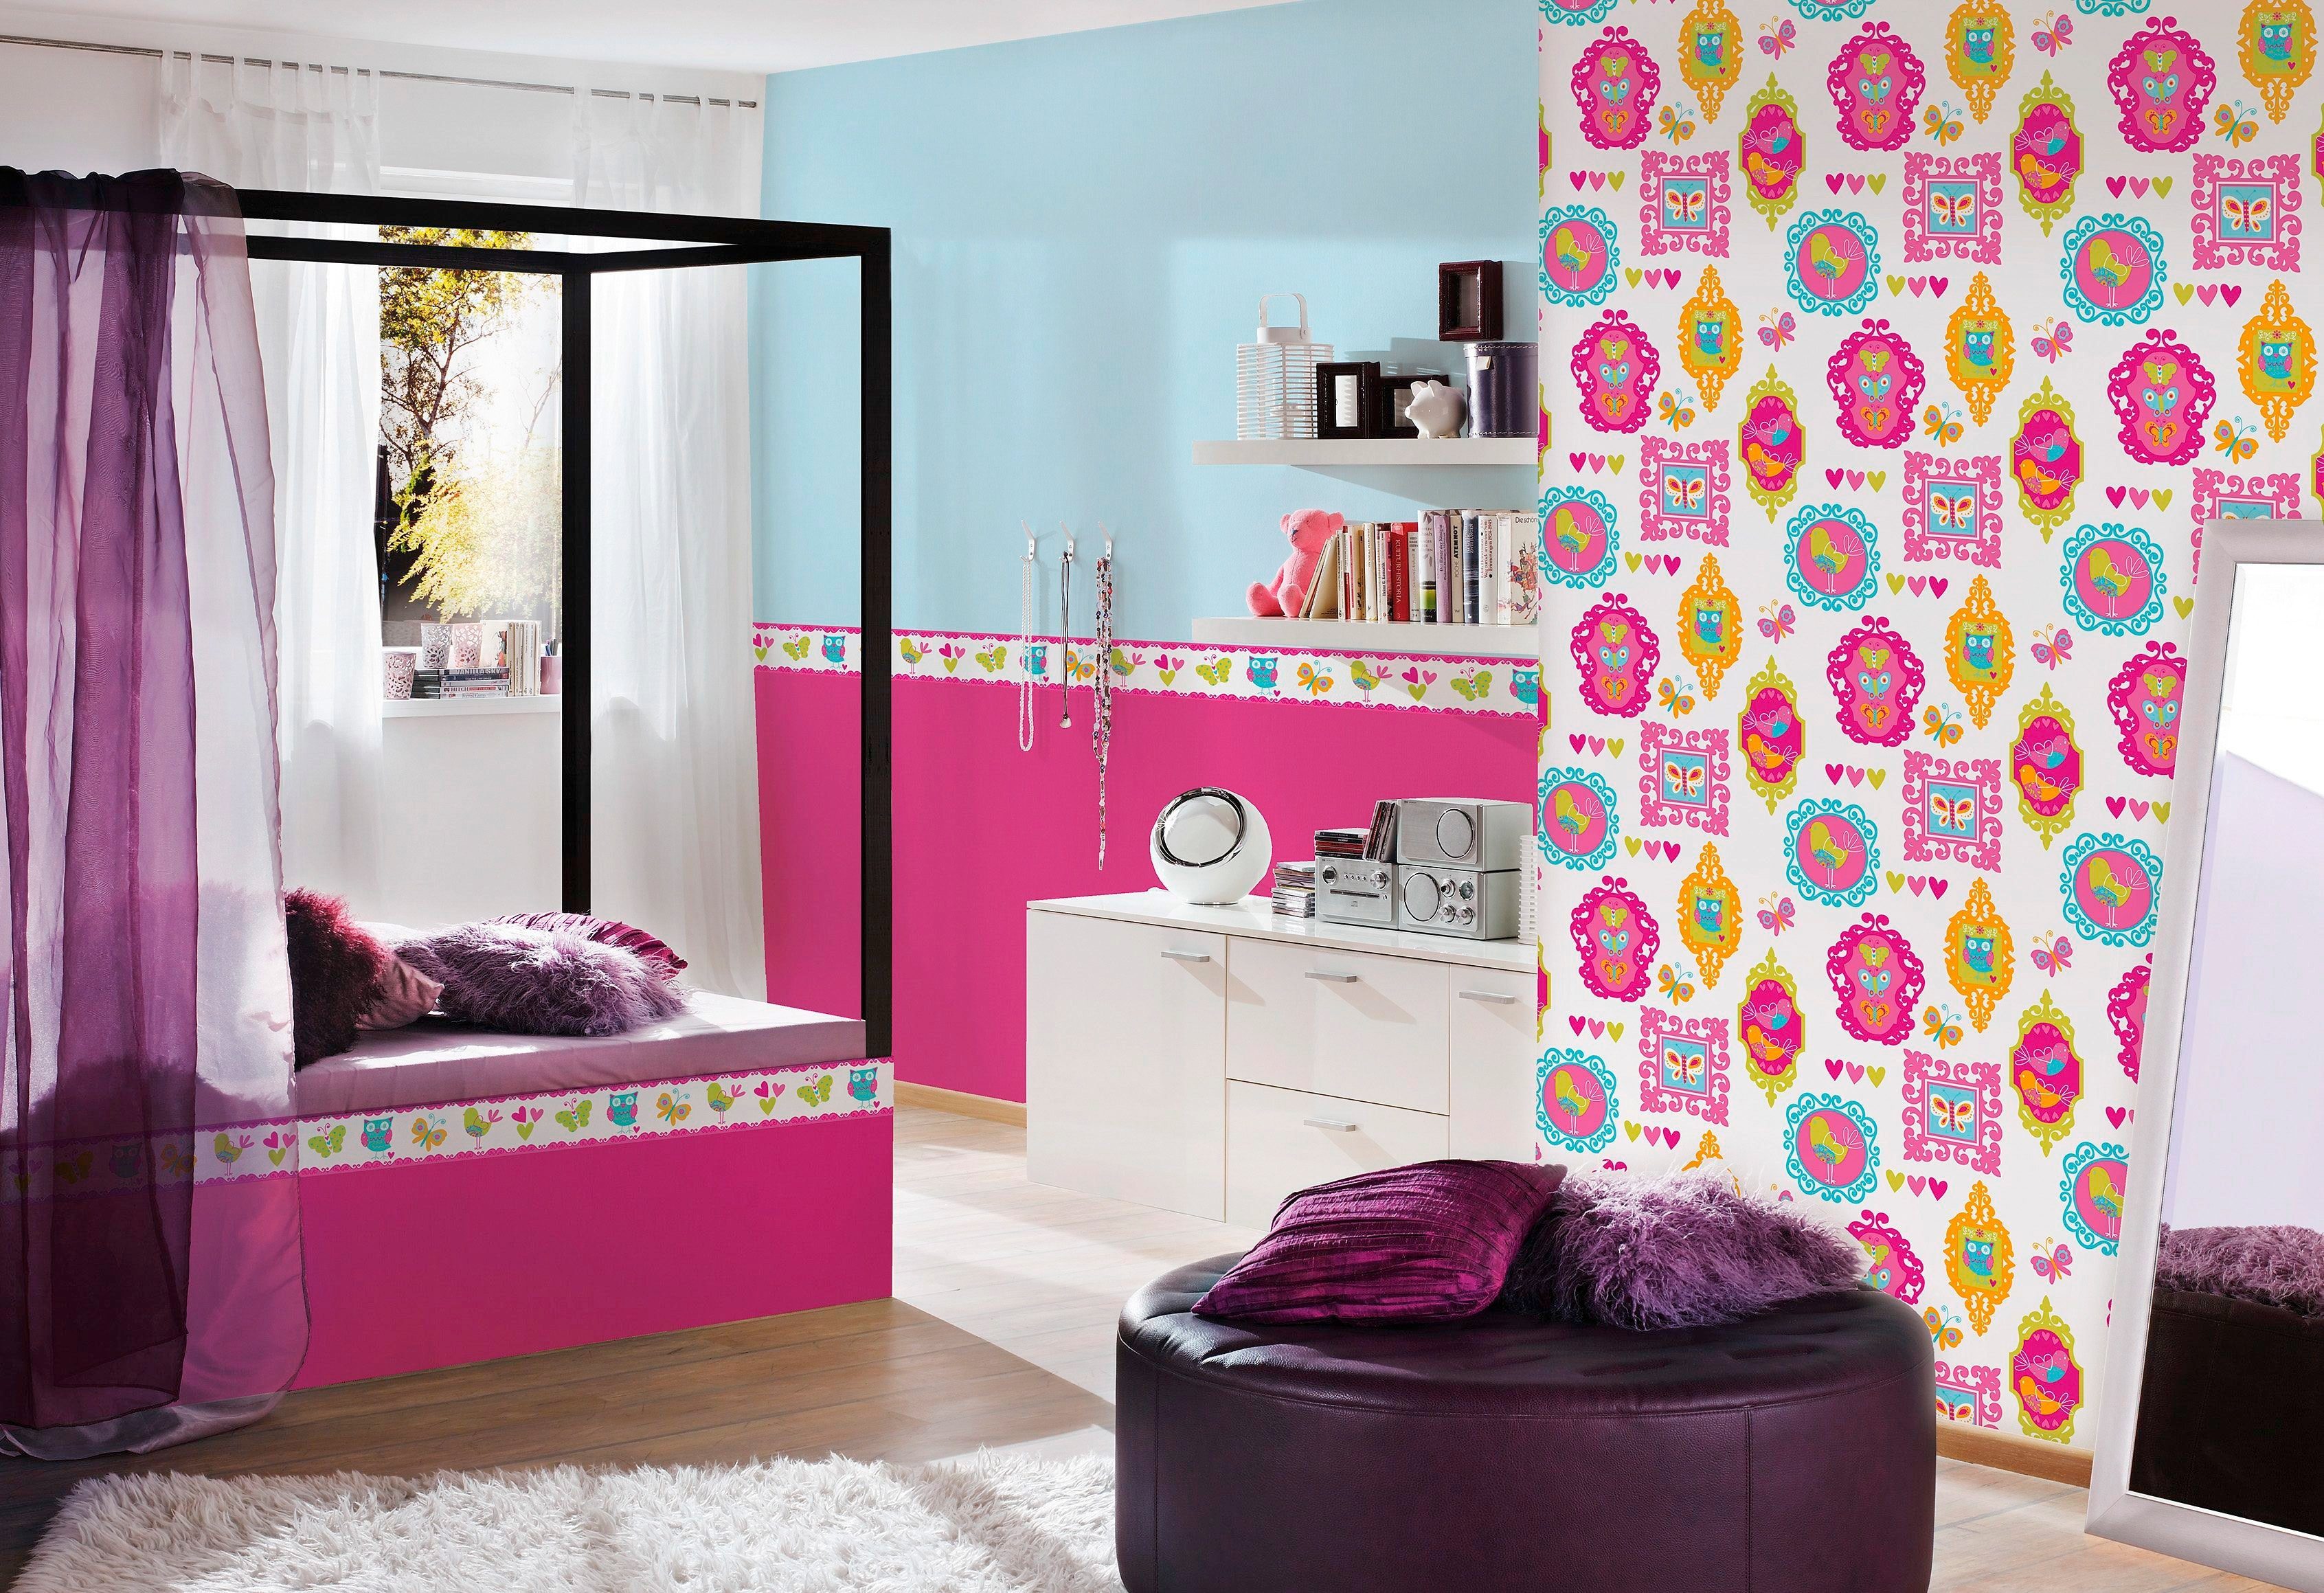 Bunt Pink Party, Tierchen Bordüre Bordüre glatt, living Kids Mädchenzimmer Kinderzimmertapete walls Kinder